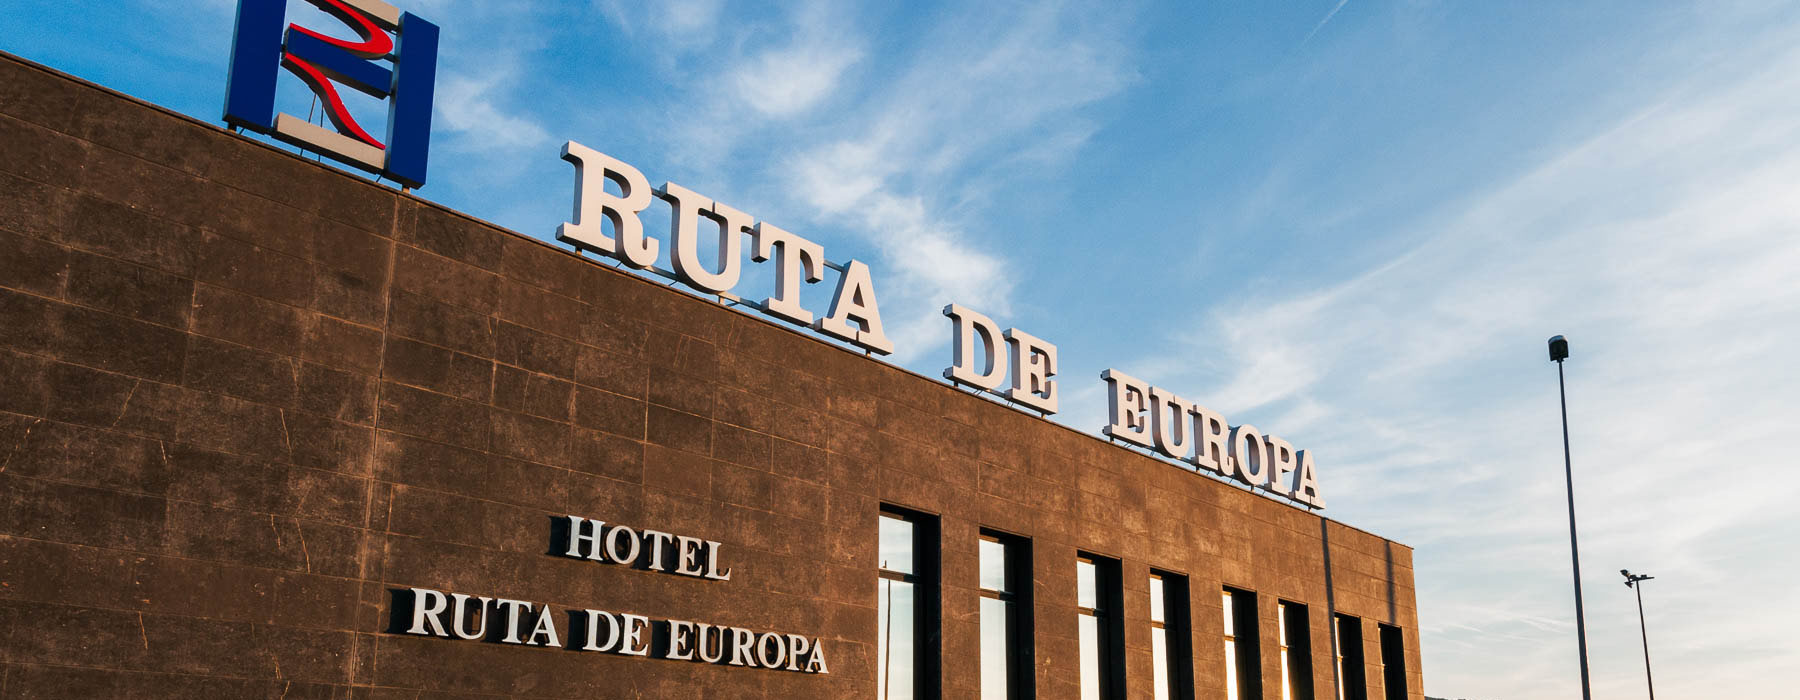 Hotel Ruta de Europa  header